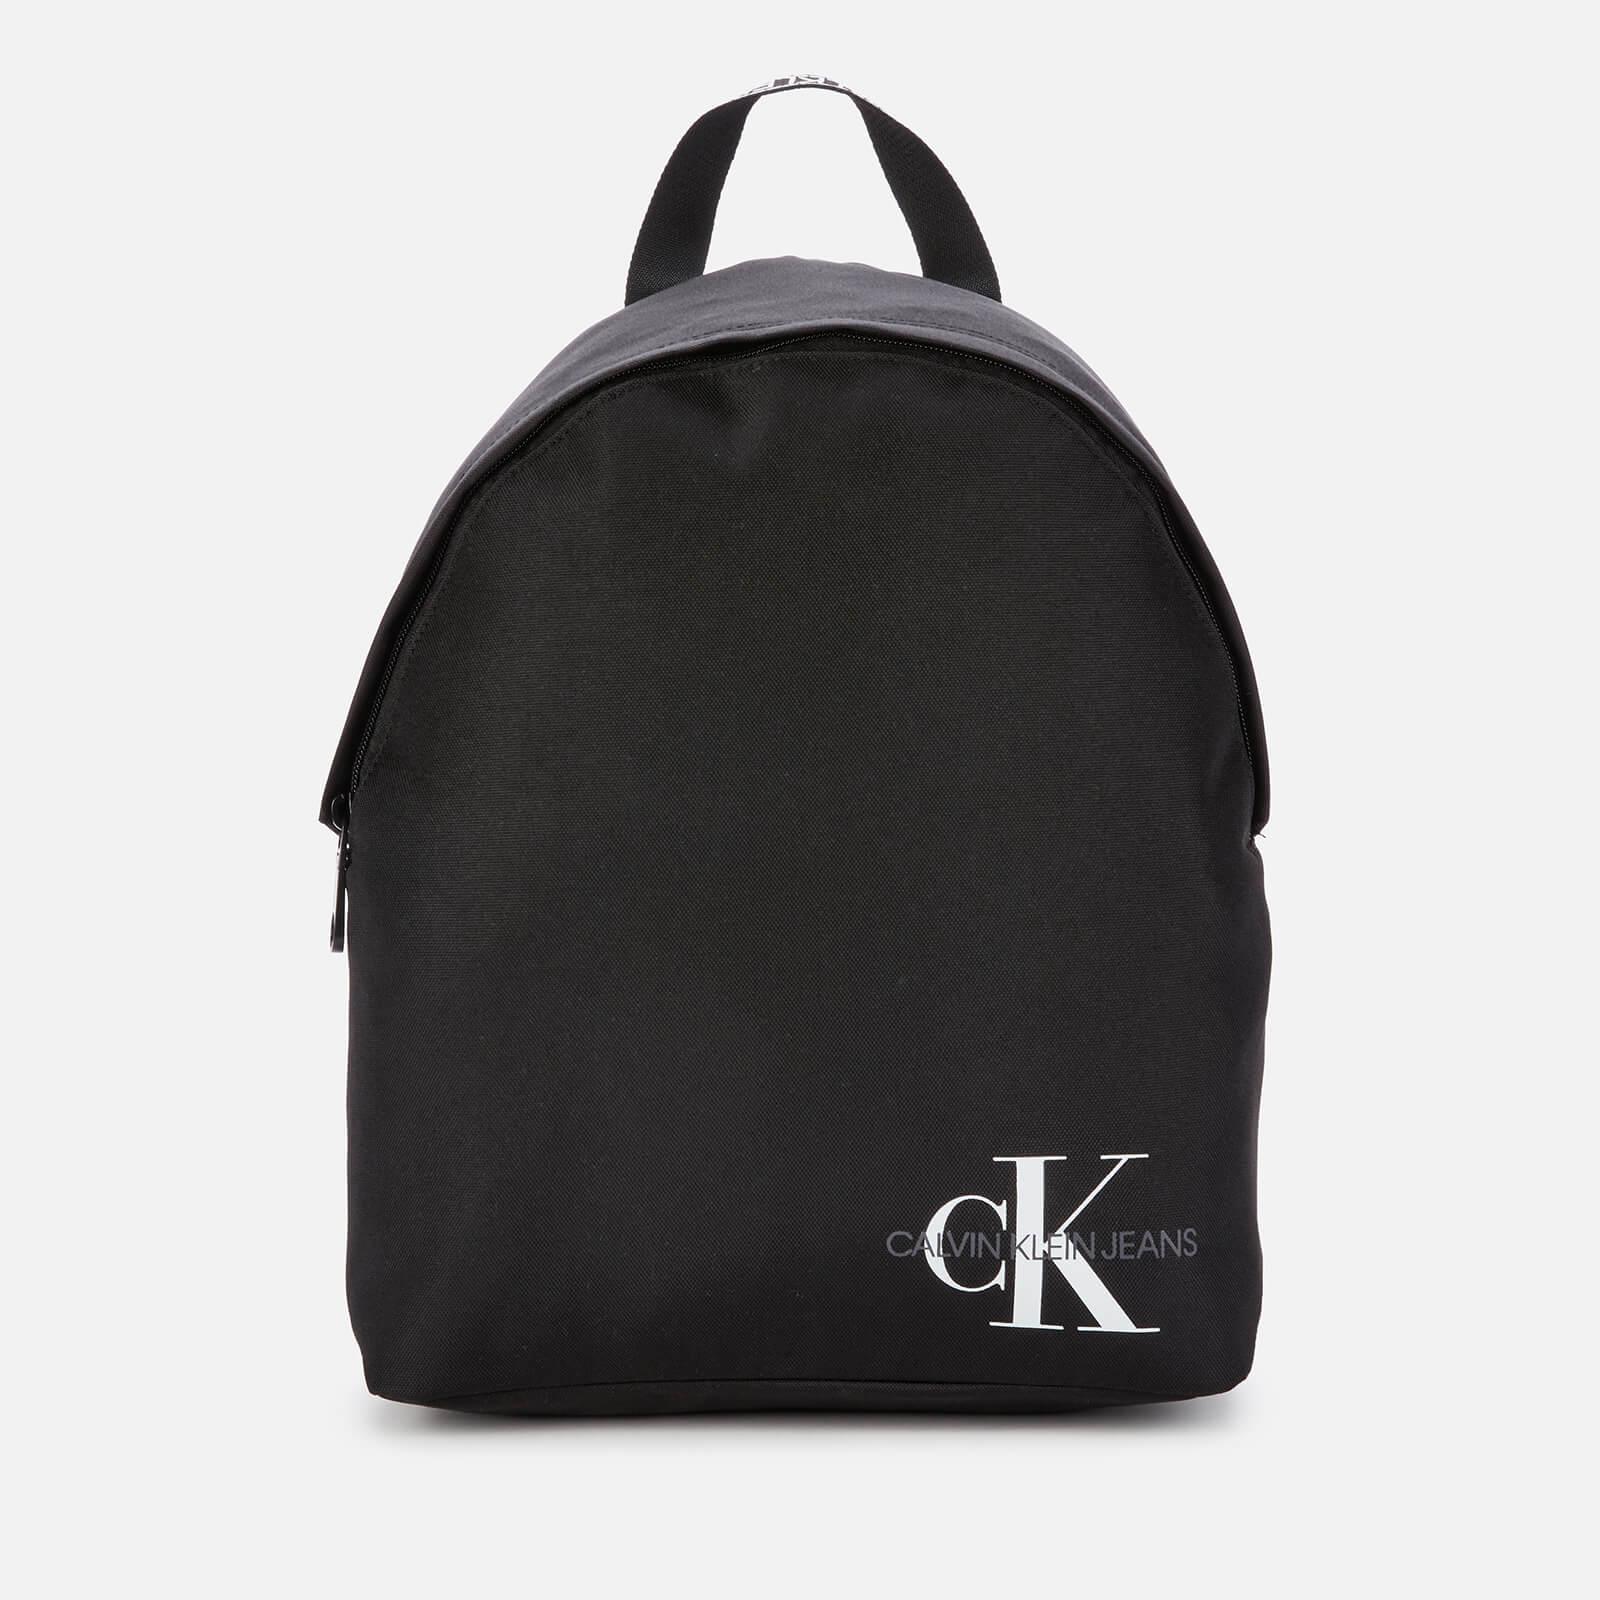 Calvin Klein Synthetic Nylon Logo Backpack in Black - Lyst